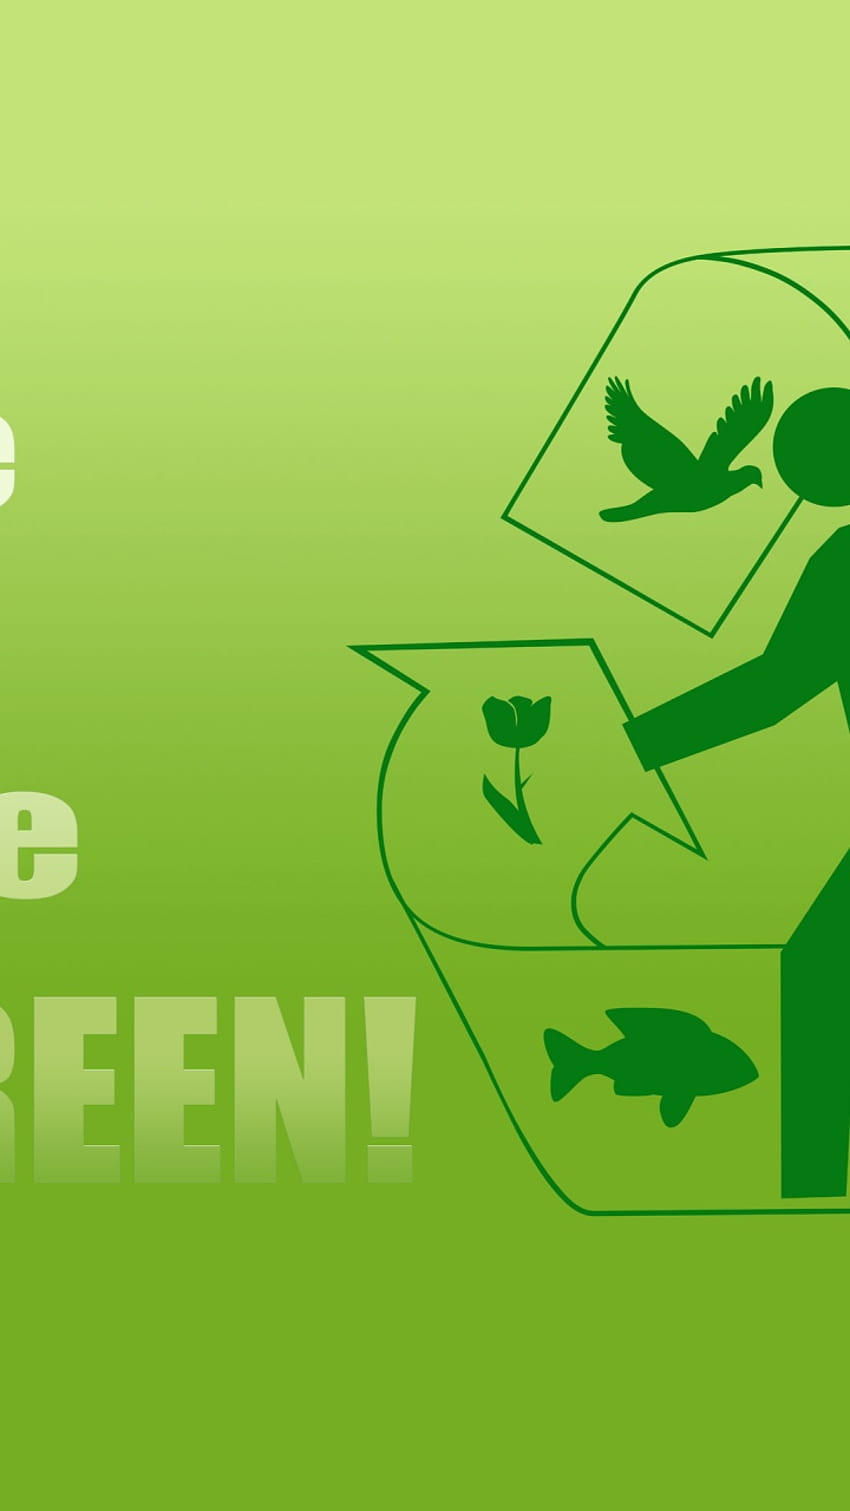 Save the future - GO GREEN! Galaxy s3 HD phone wallpaper